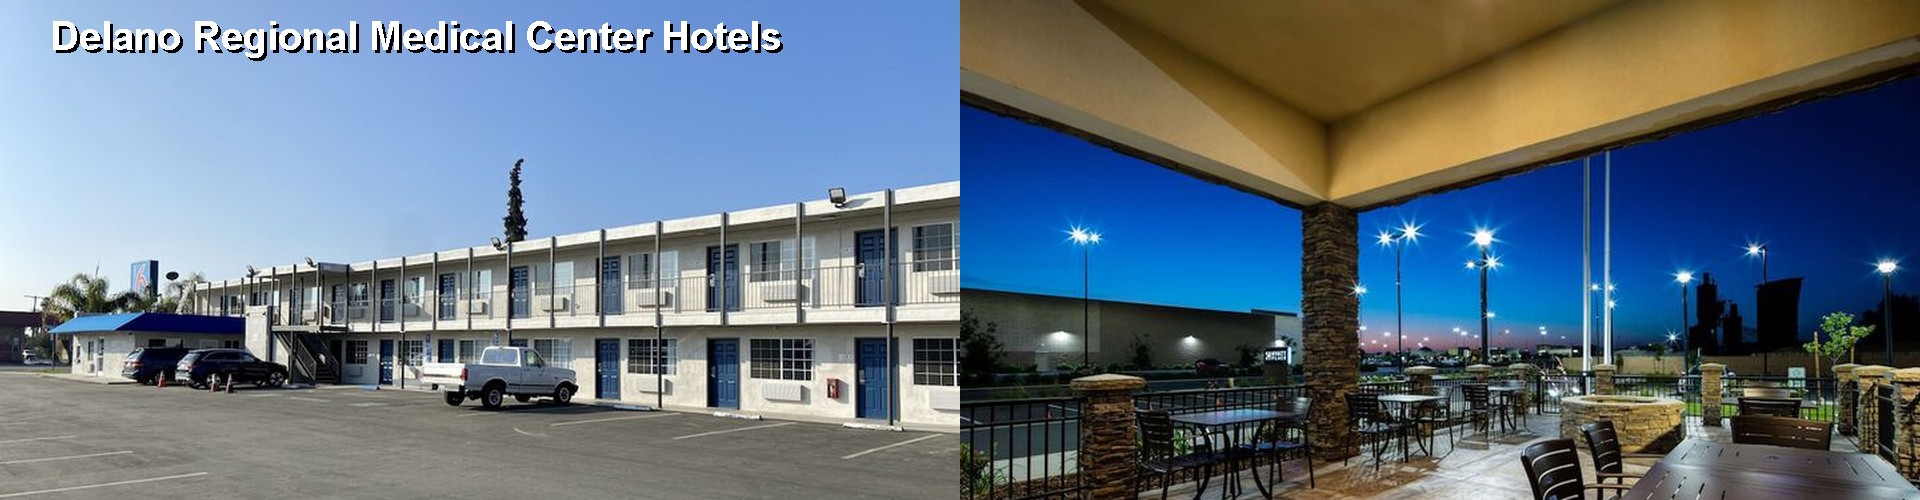 5 Best Hotels near Delano Regional Medical Center